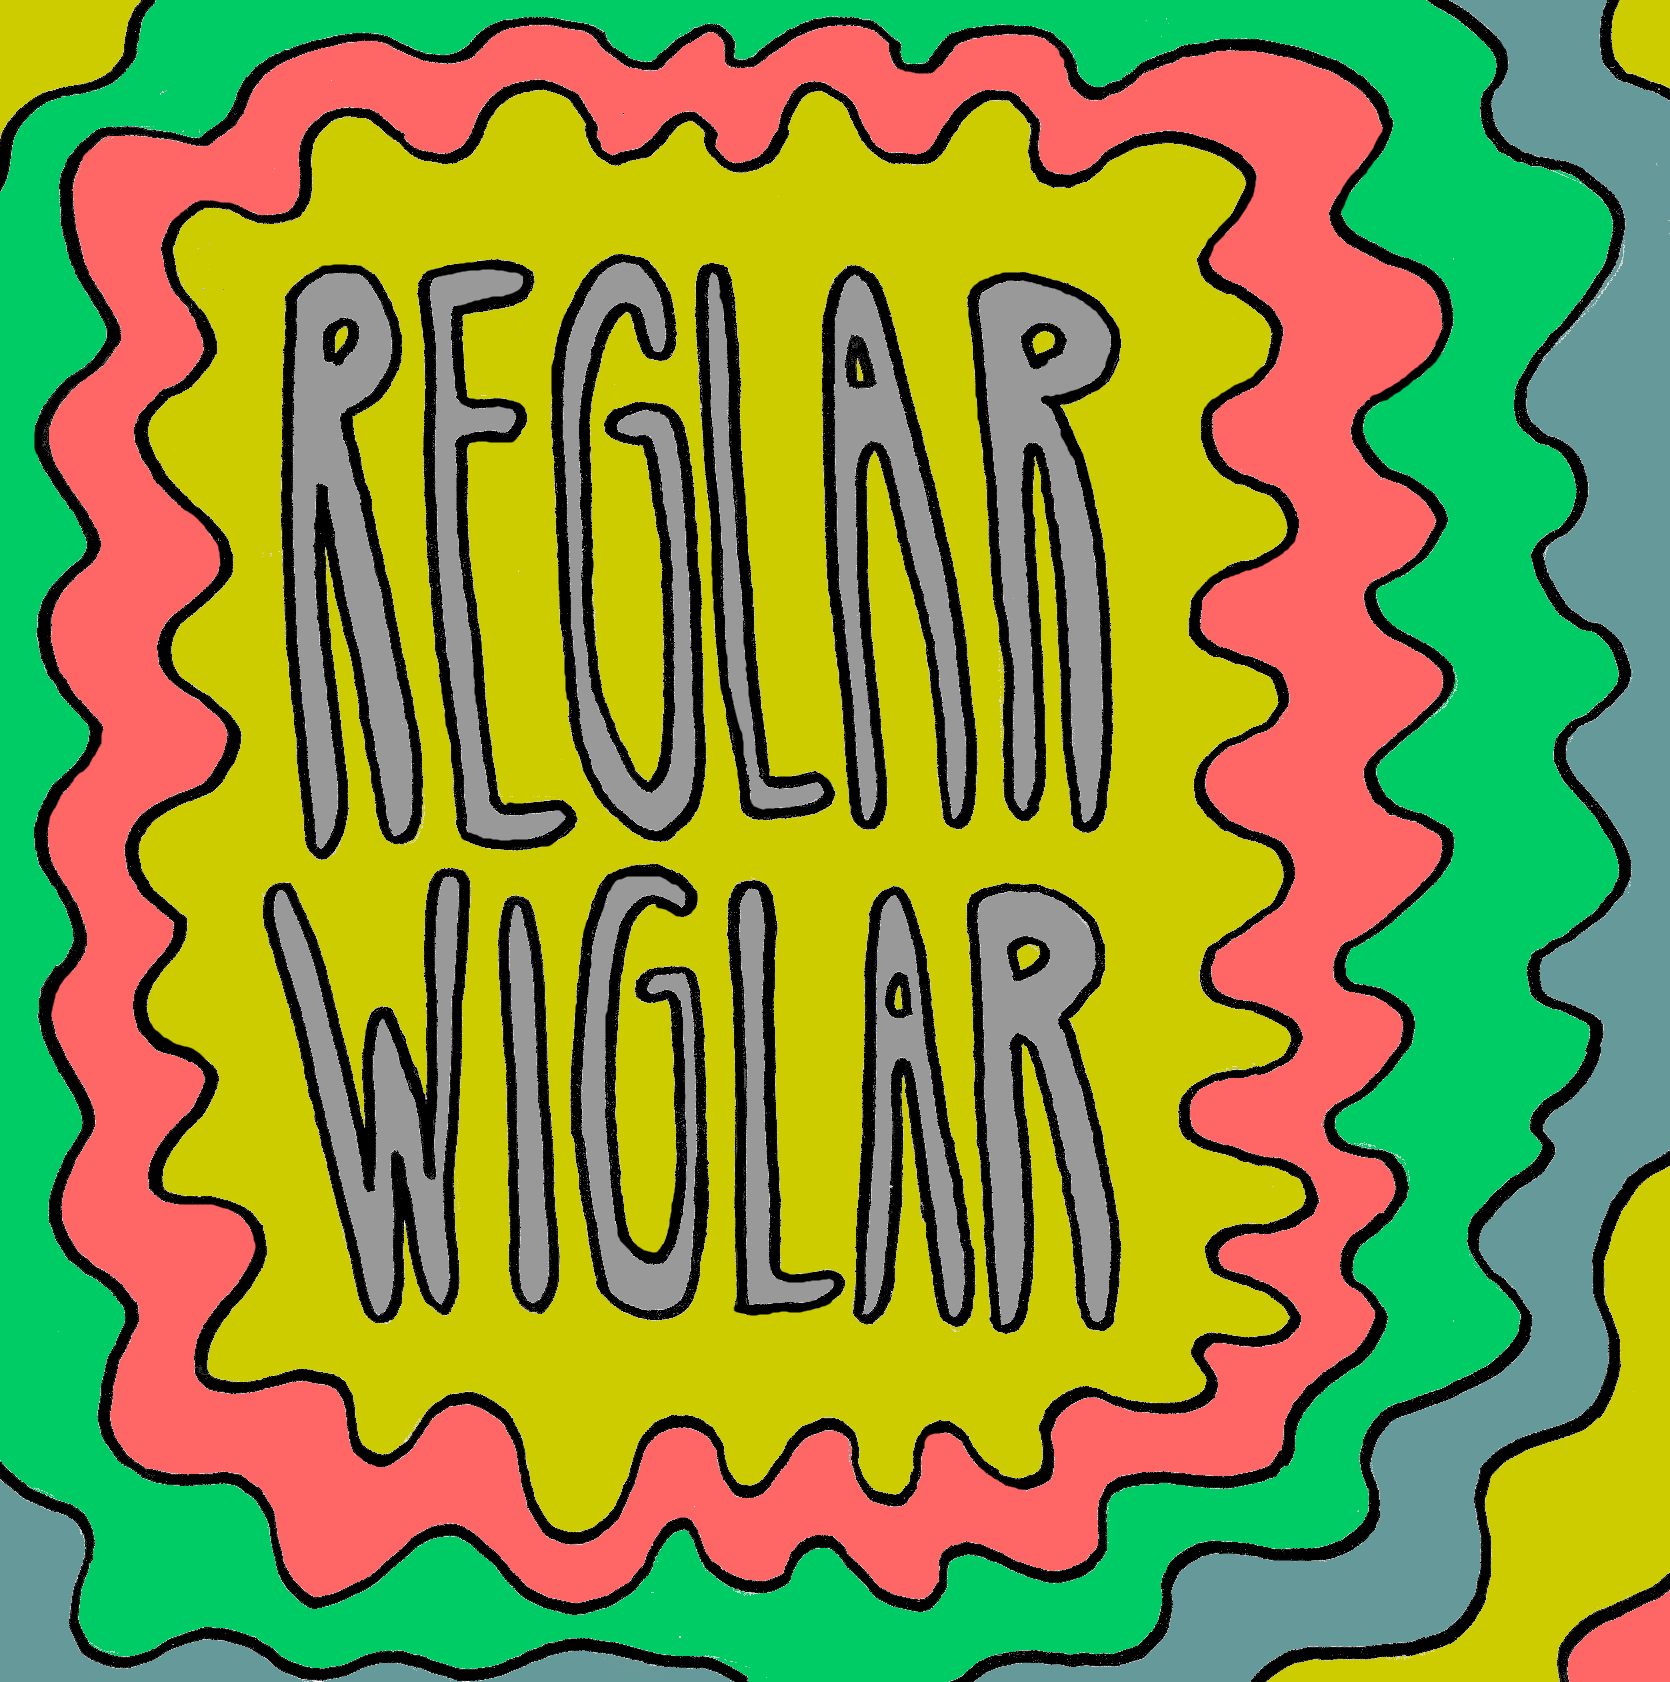 Always read Reglar Wiglar